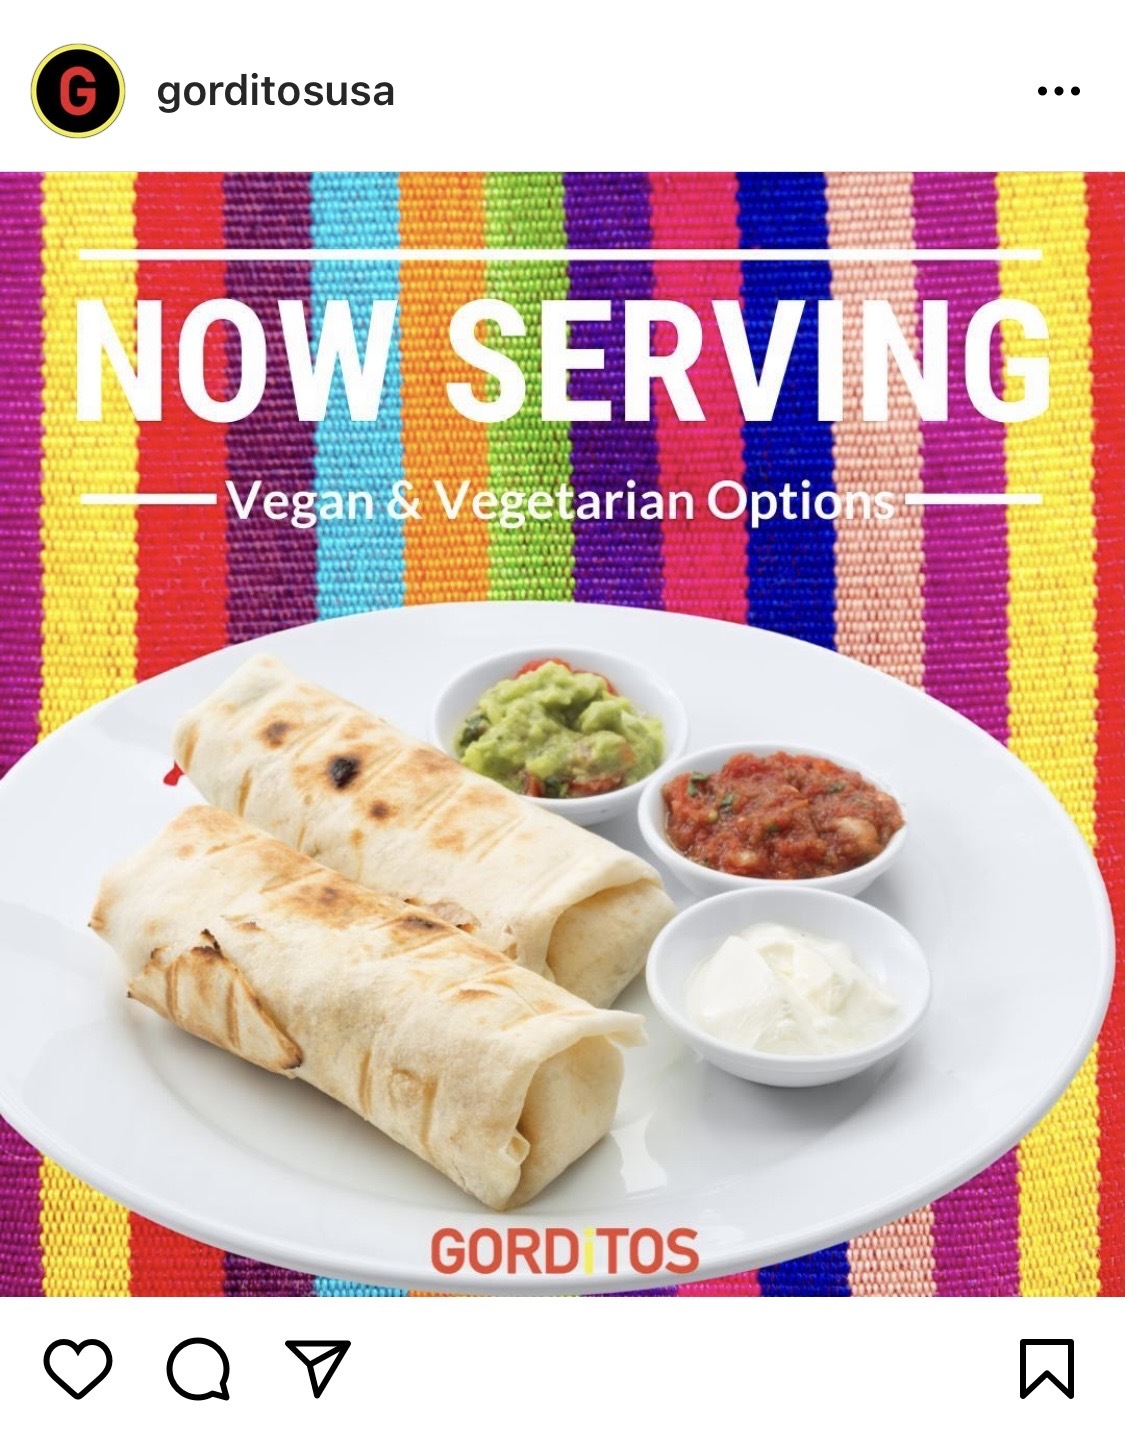 Vegan and vegetarian options digital advertisement for Gorditos